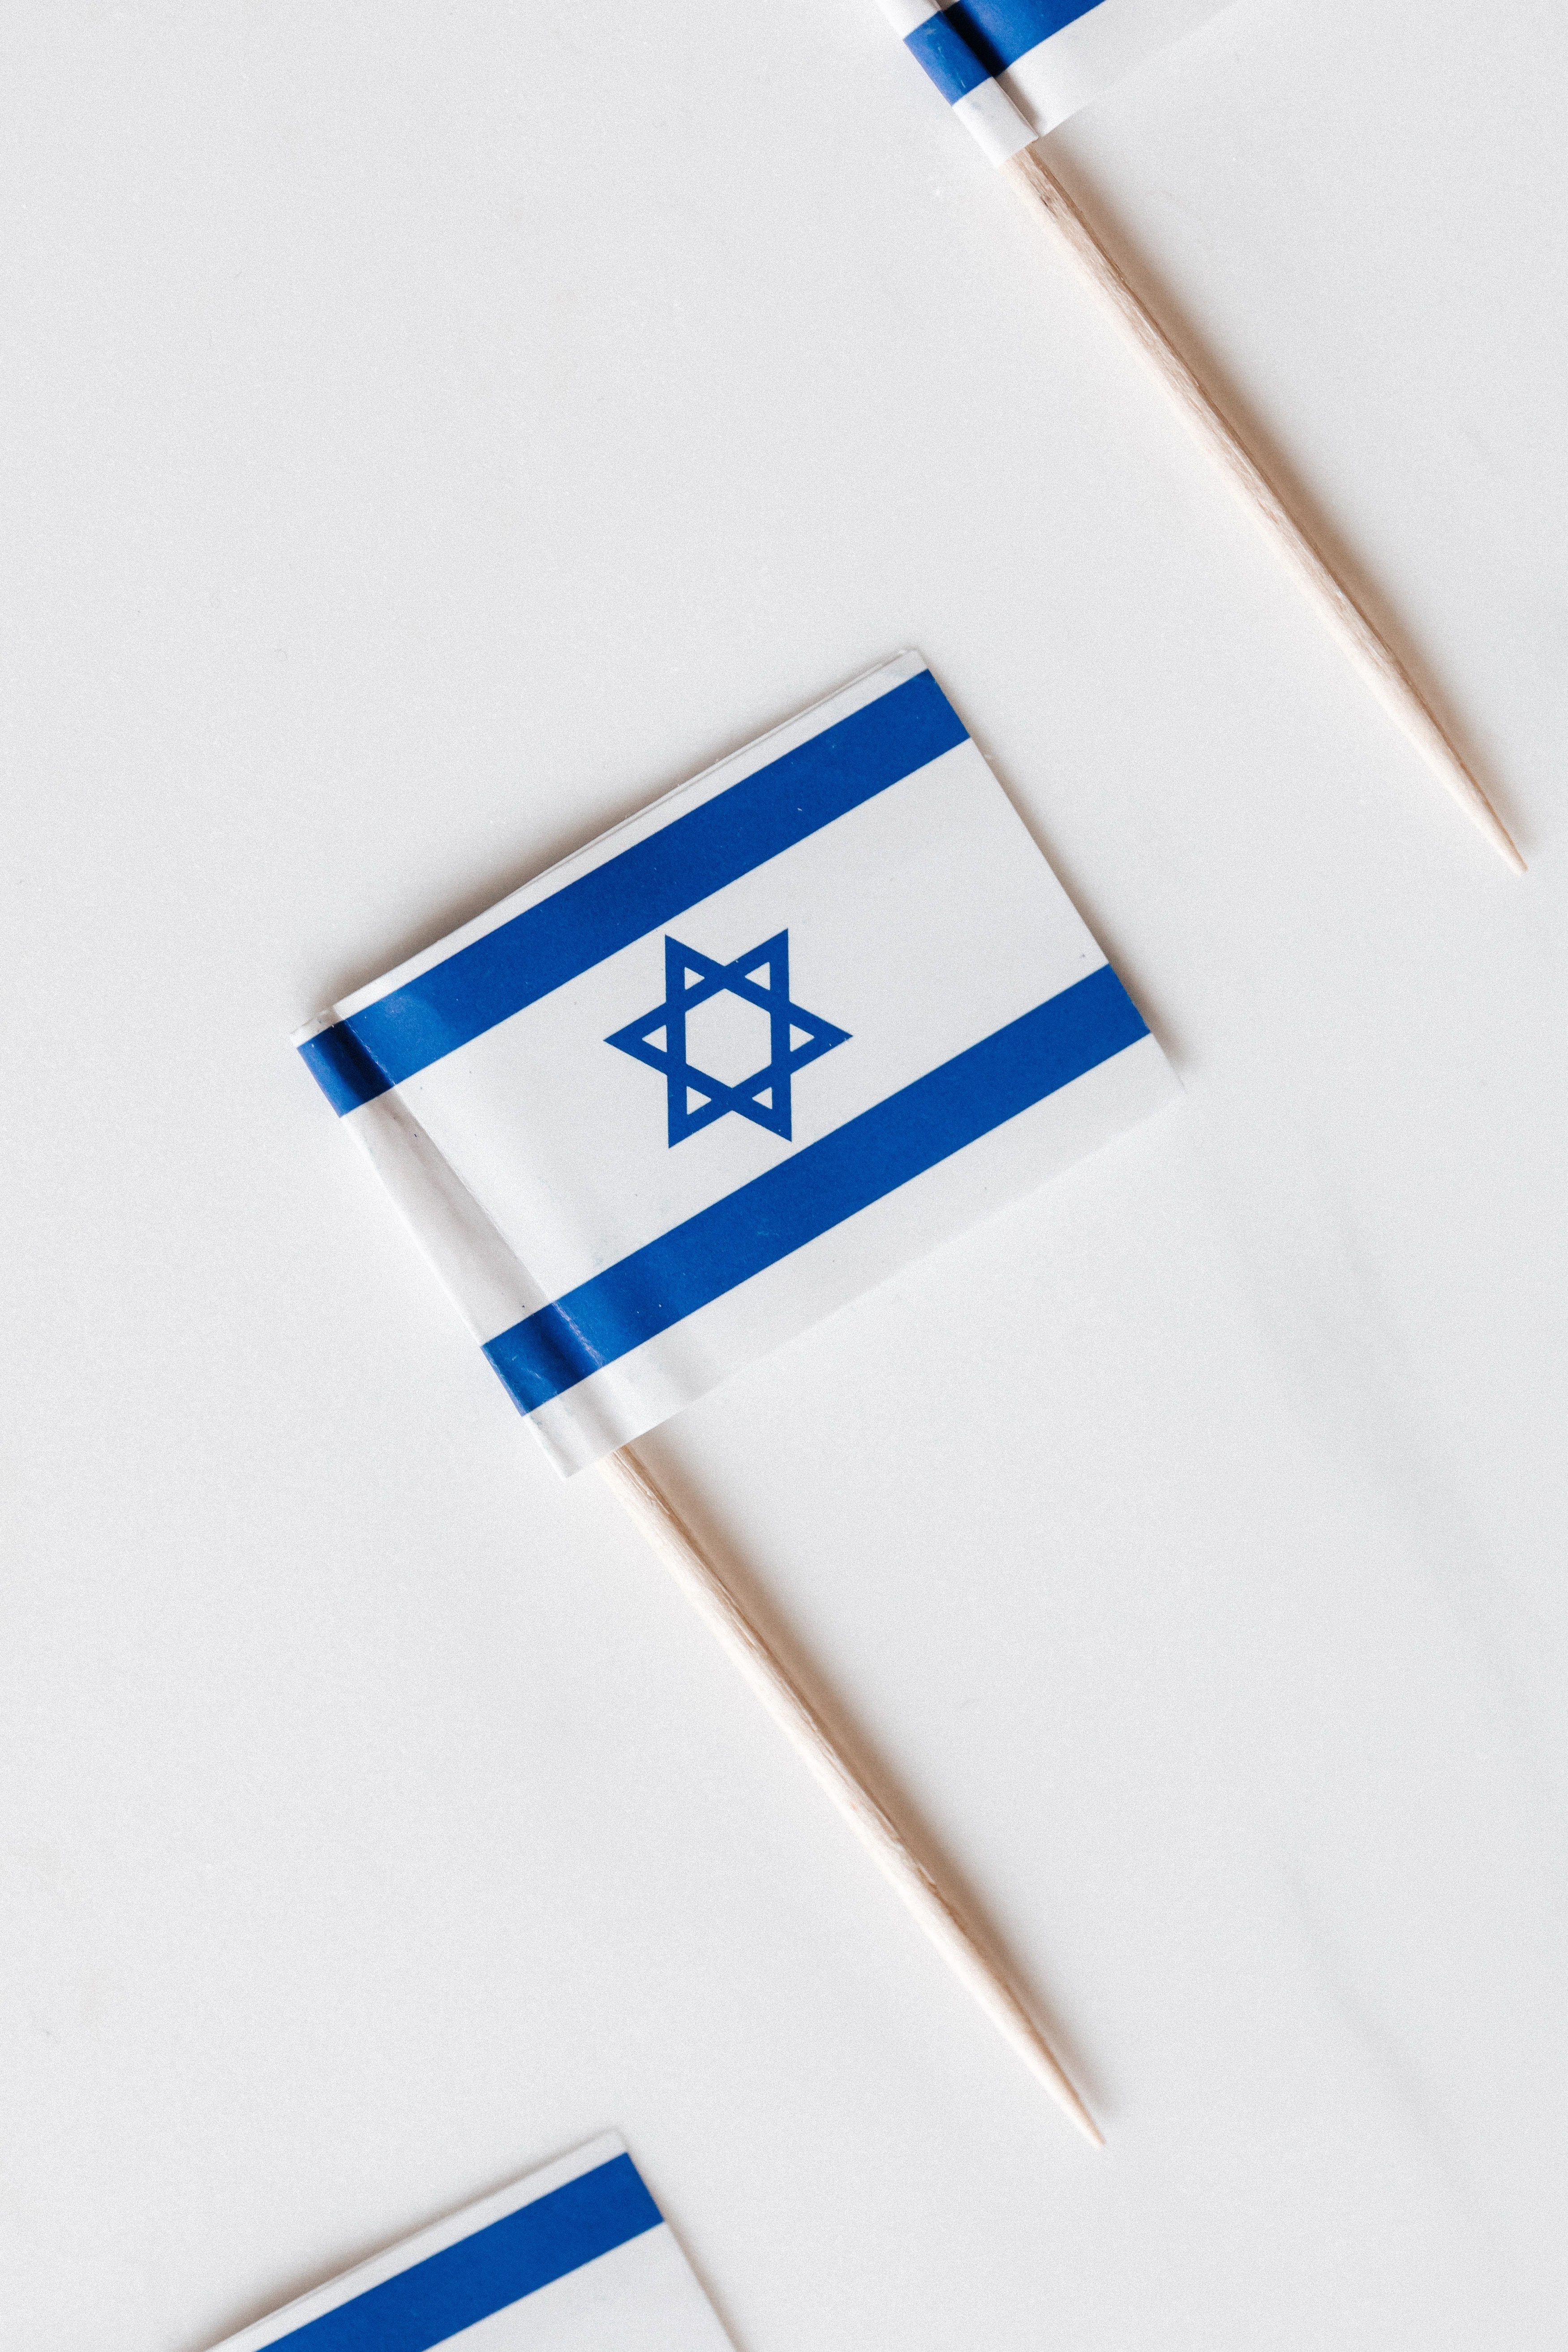 National Flag - Israel